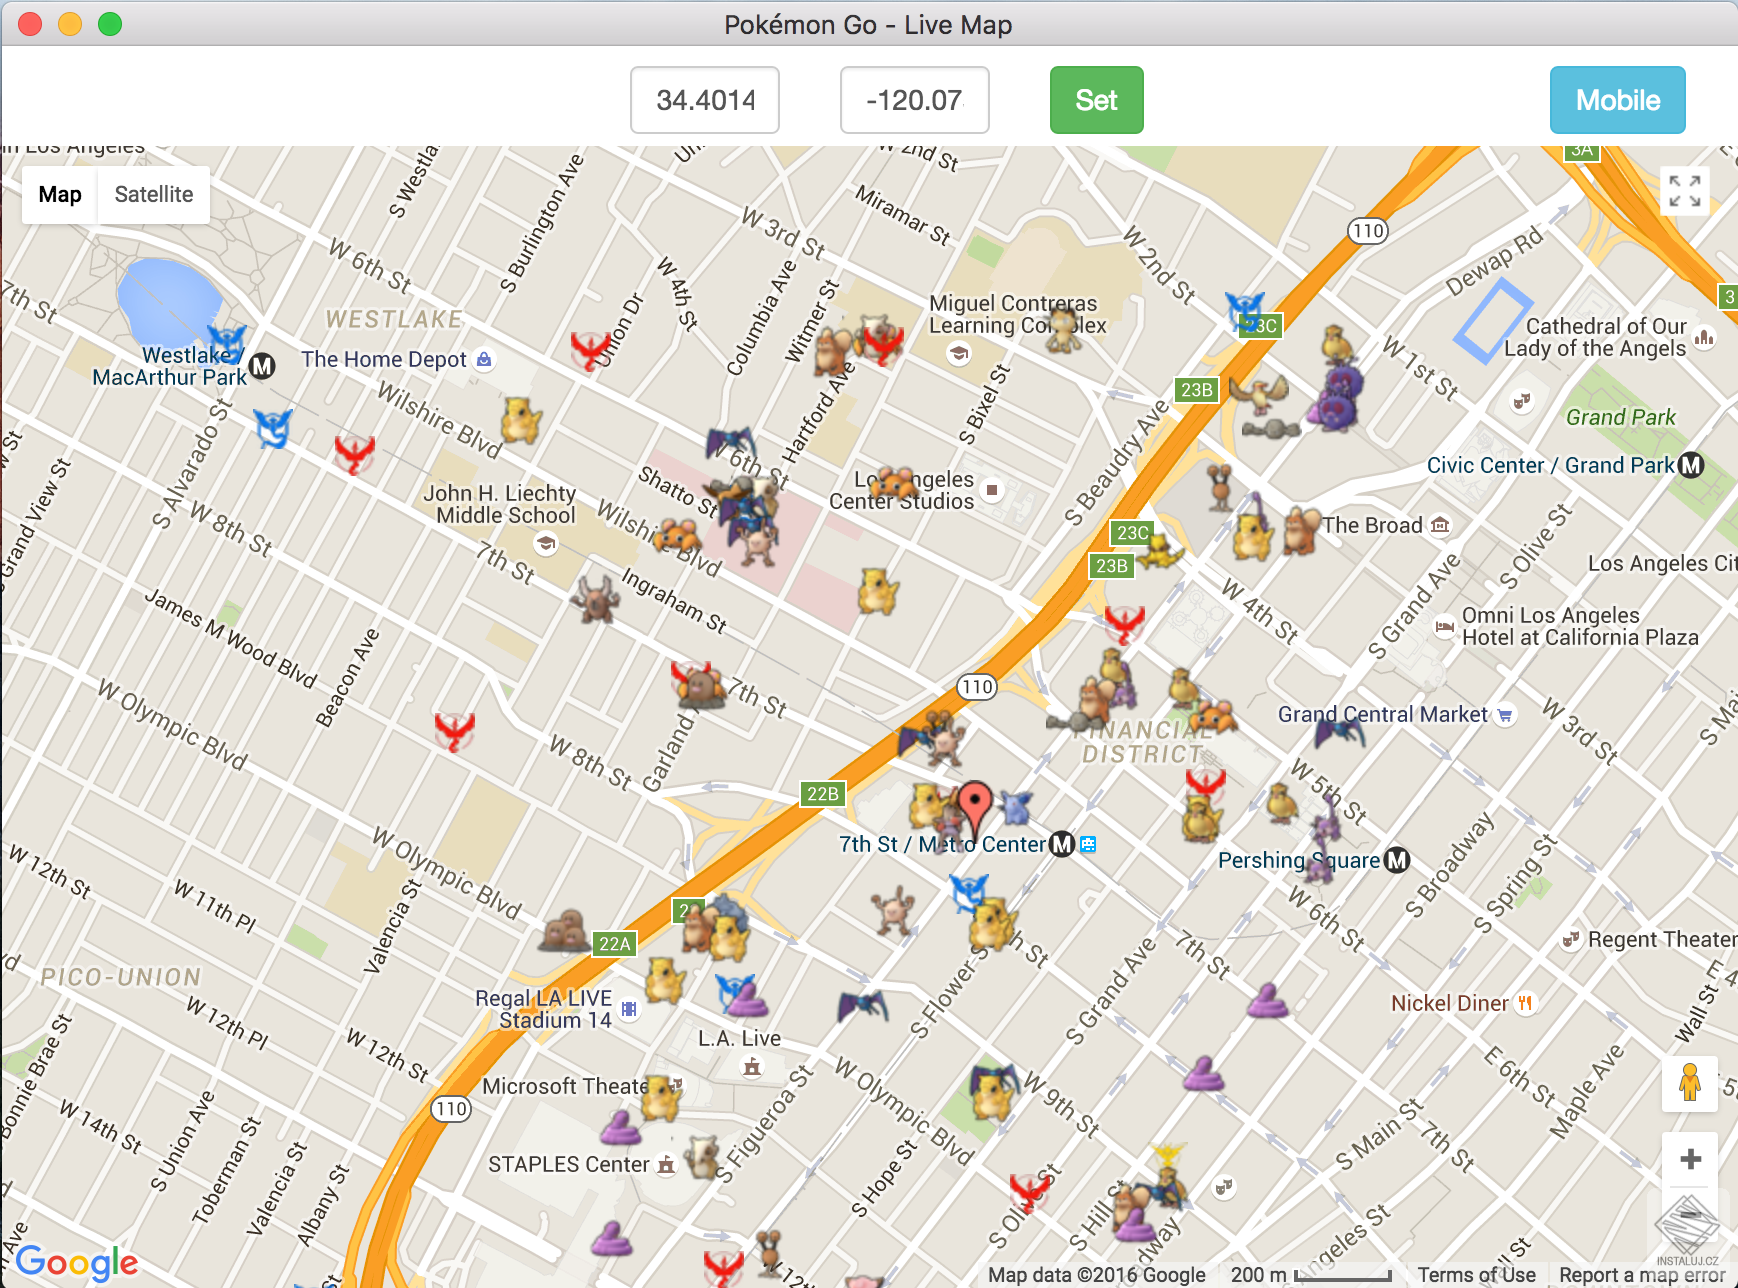 Pokémon GO - Live Map